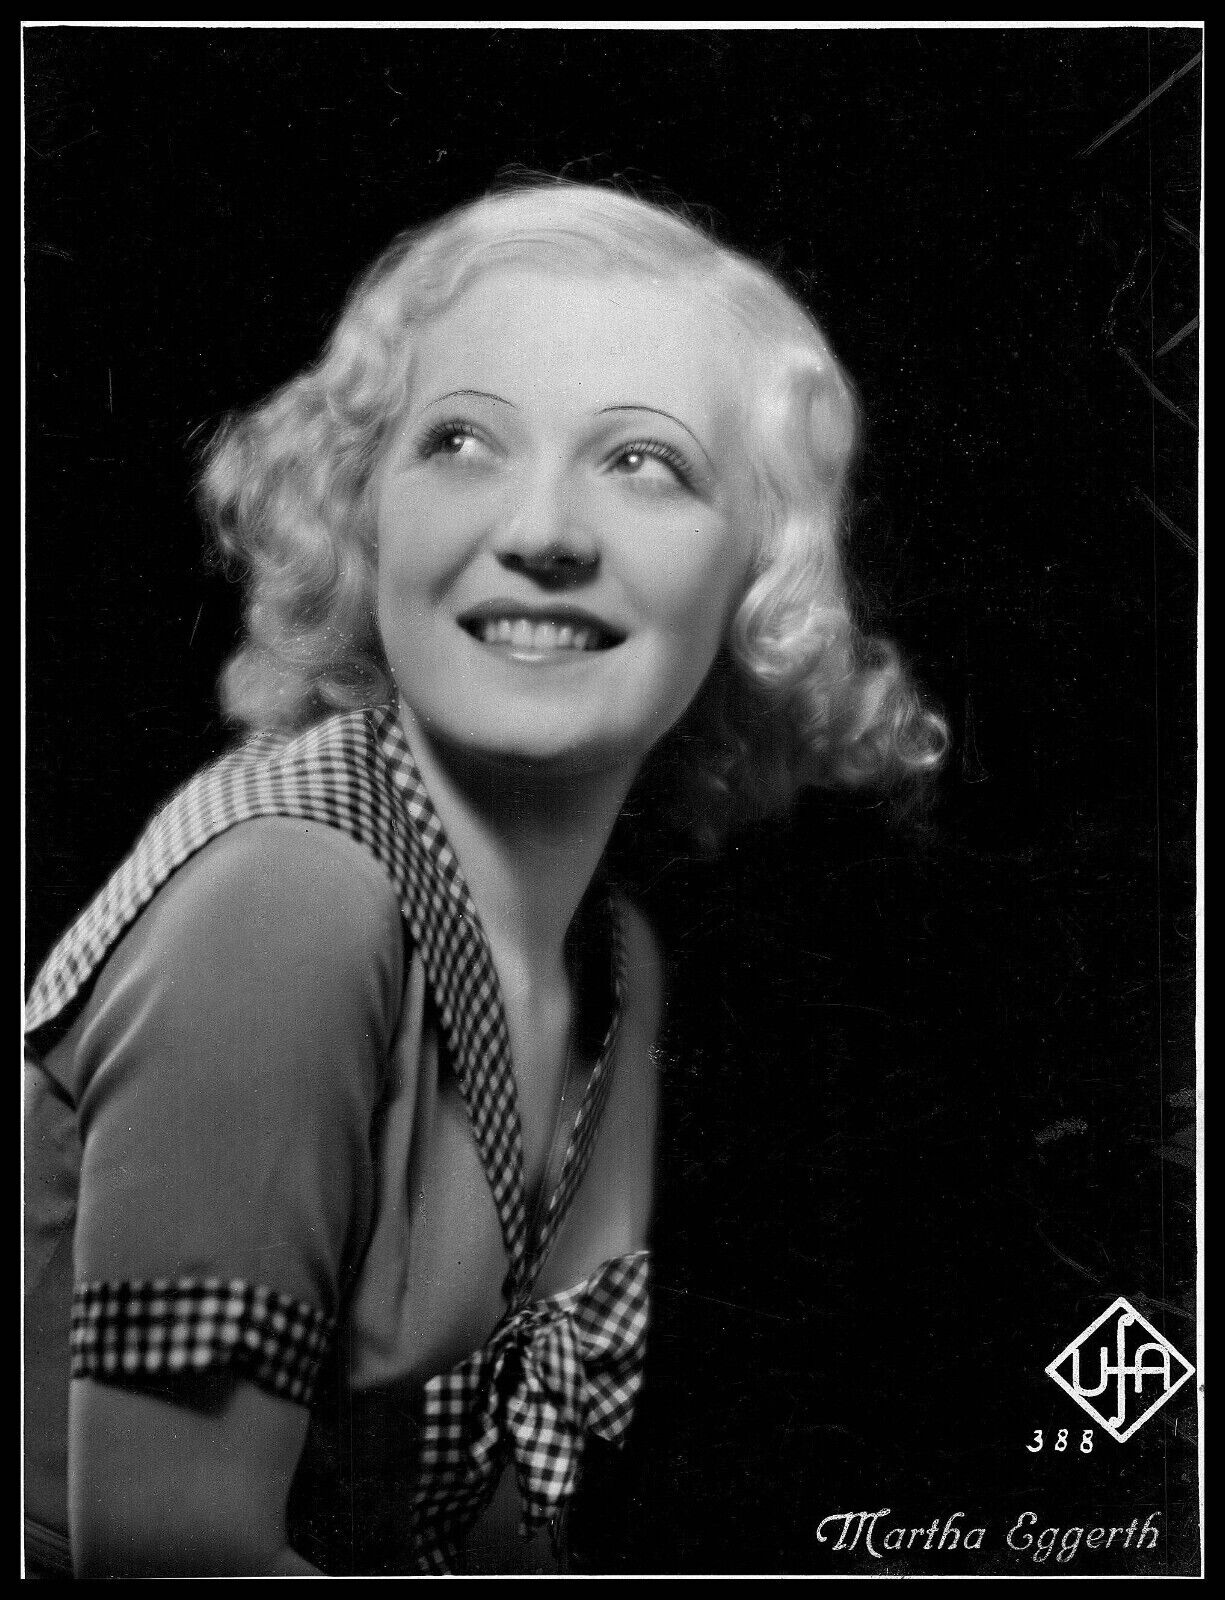 Mártha Eggerth (1930s) 🎬⭐ Original Vintage Stunning Portrait Photo by Ufa K 325